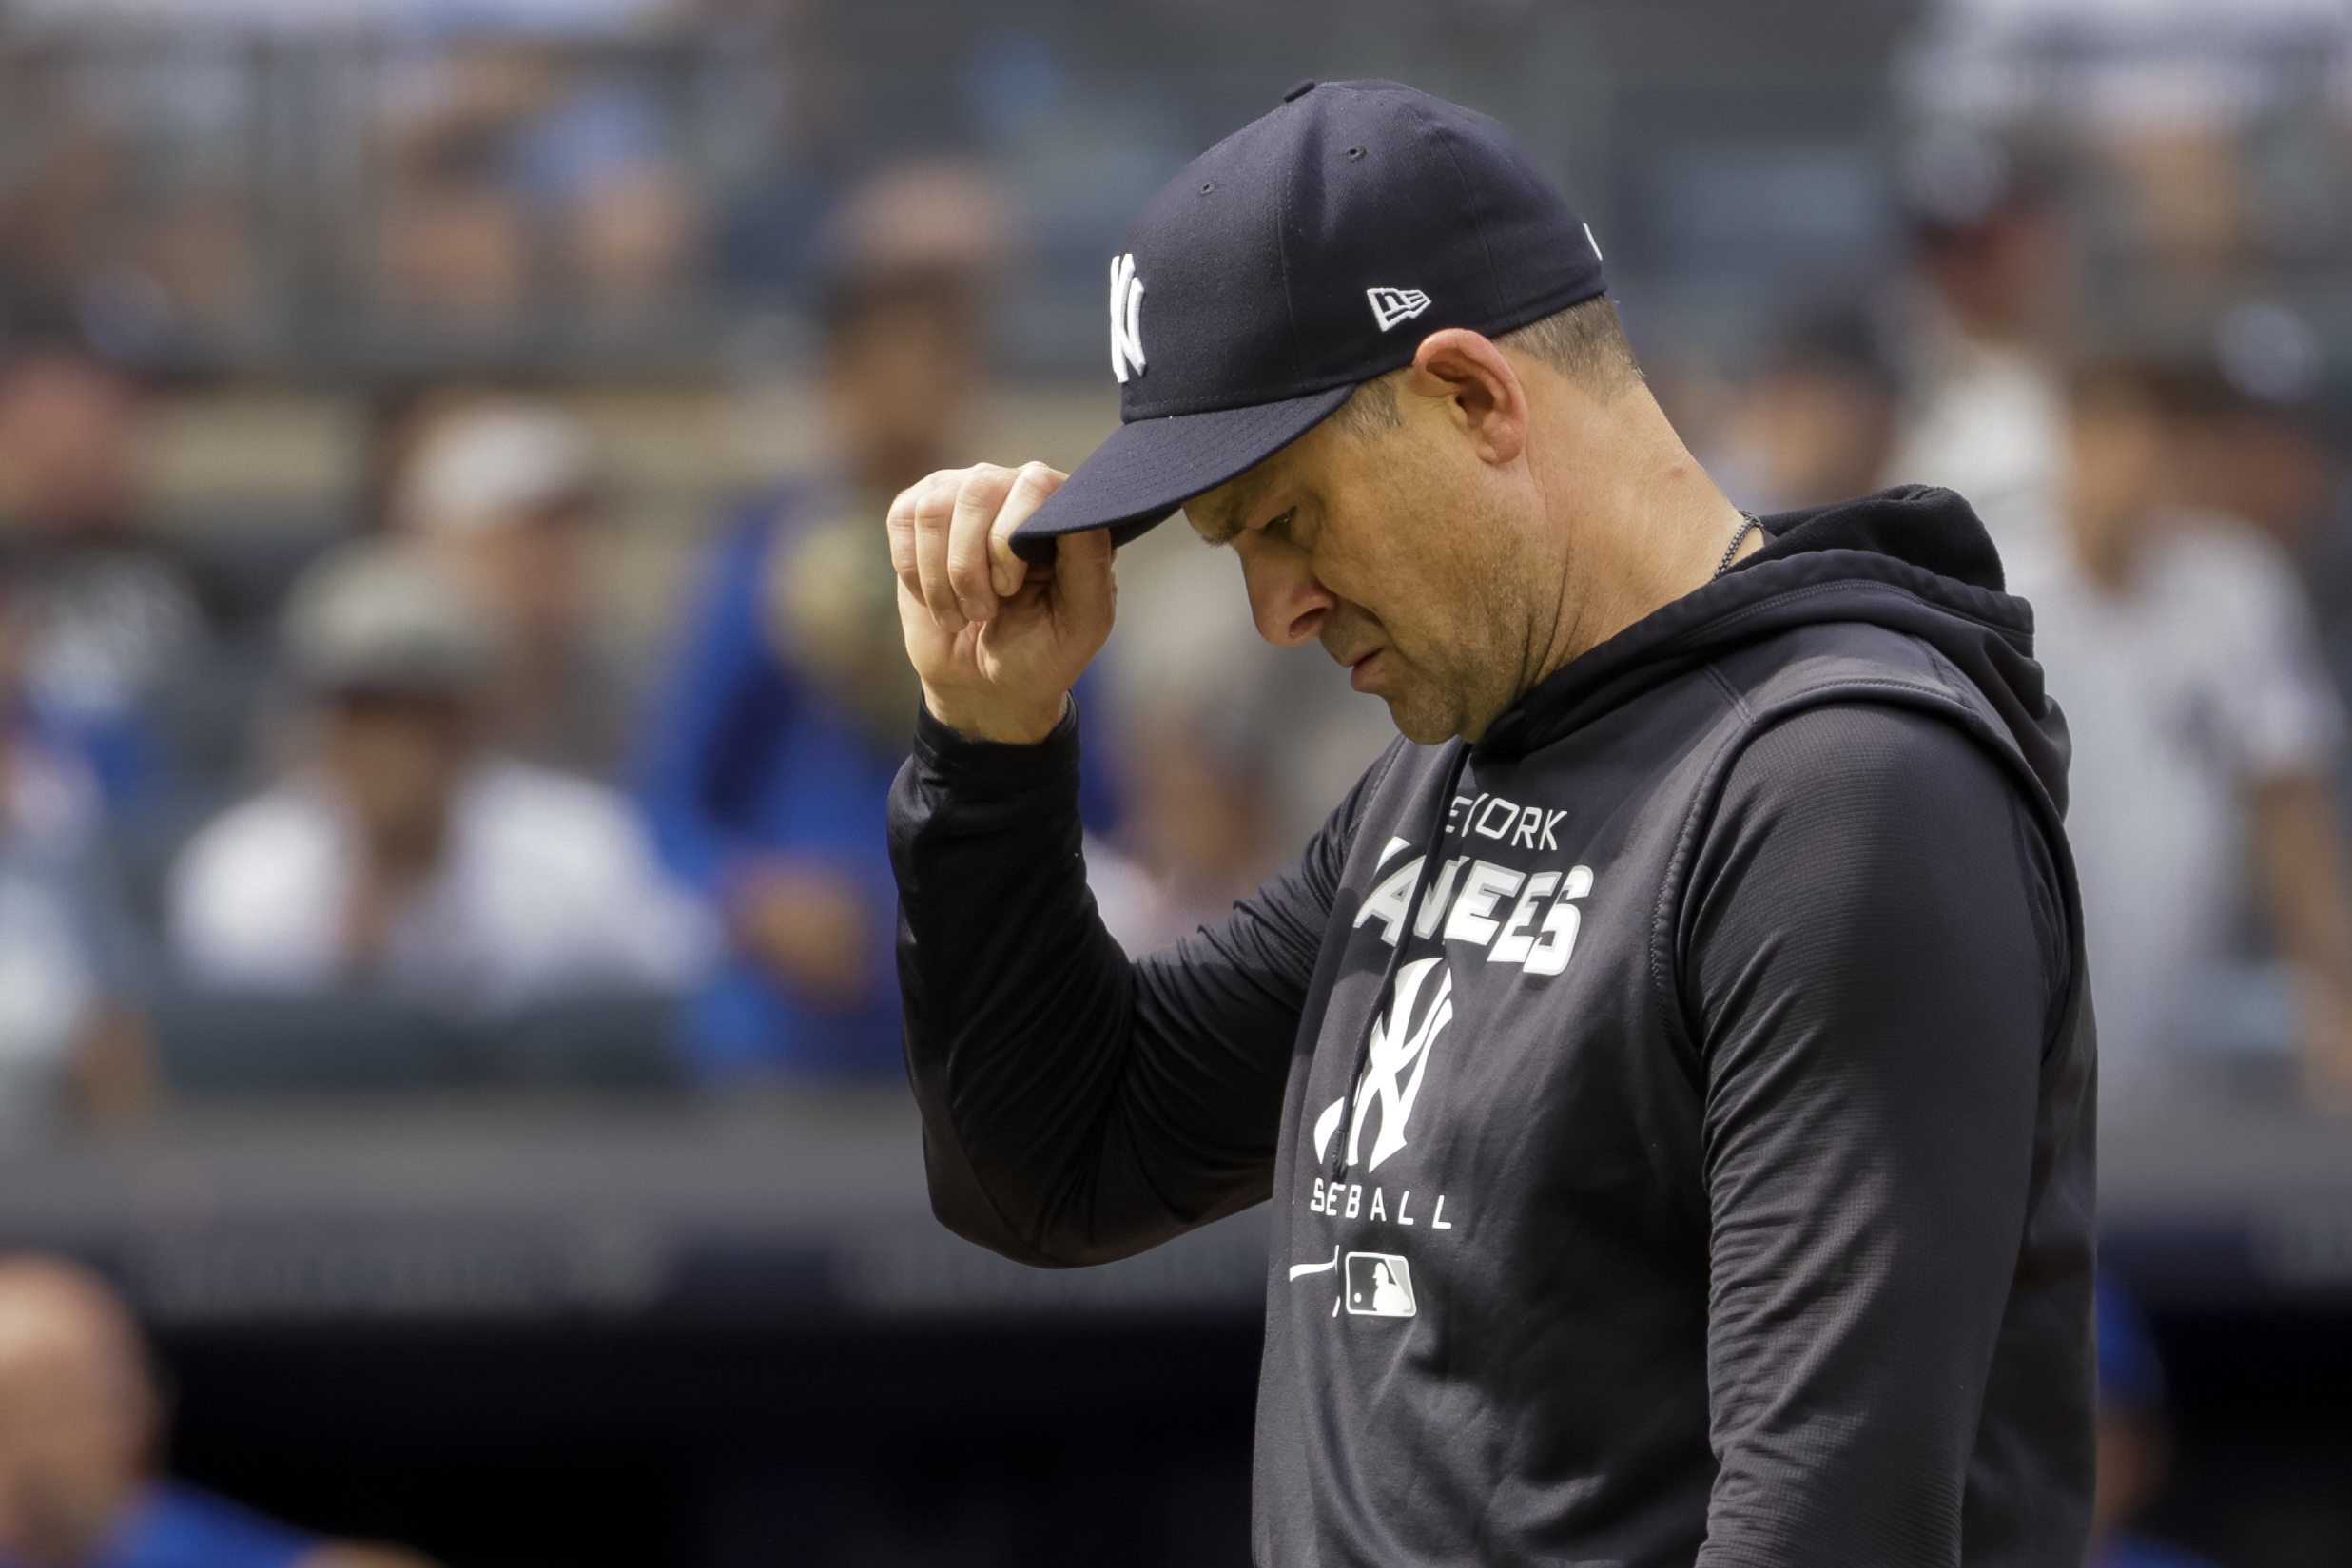 Insider shares big updates on Aaron Boone, Yankees offseason